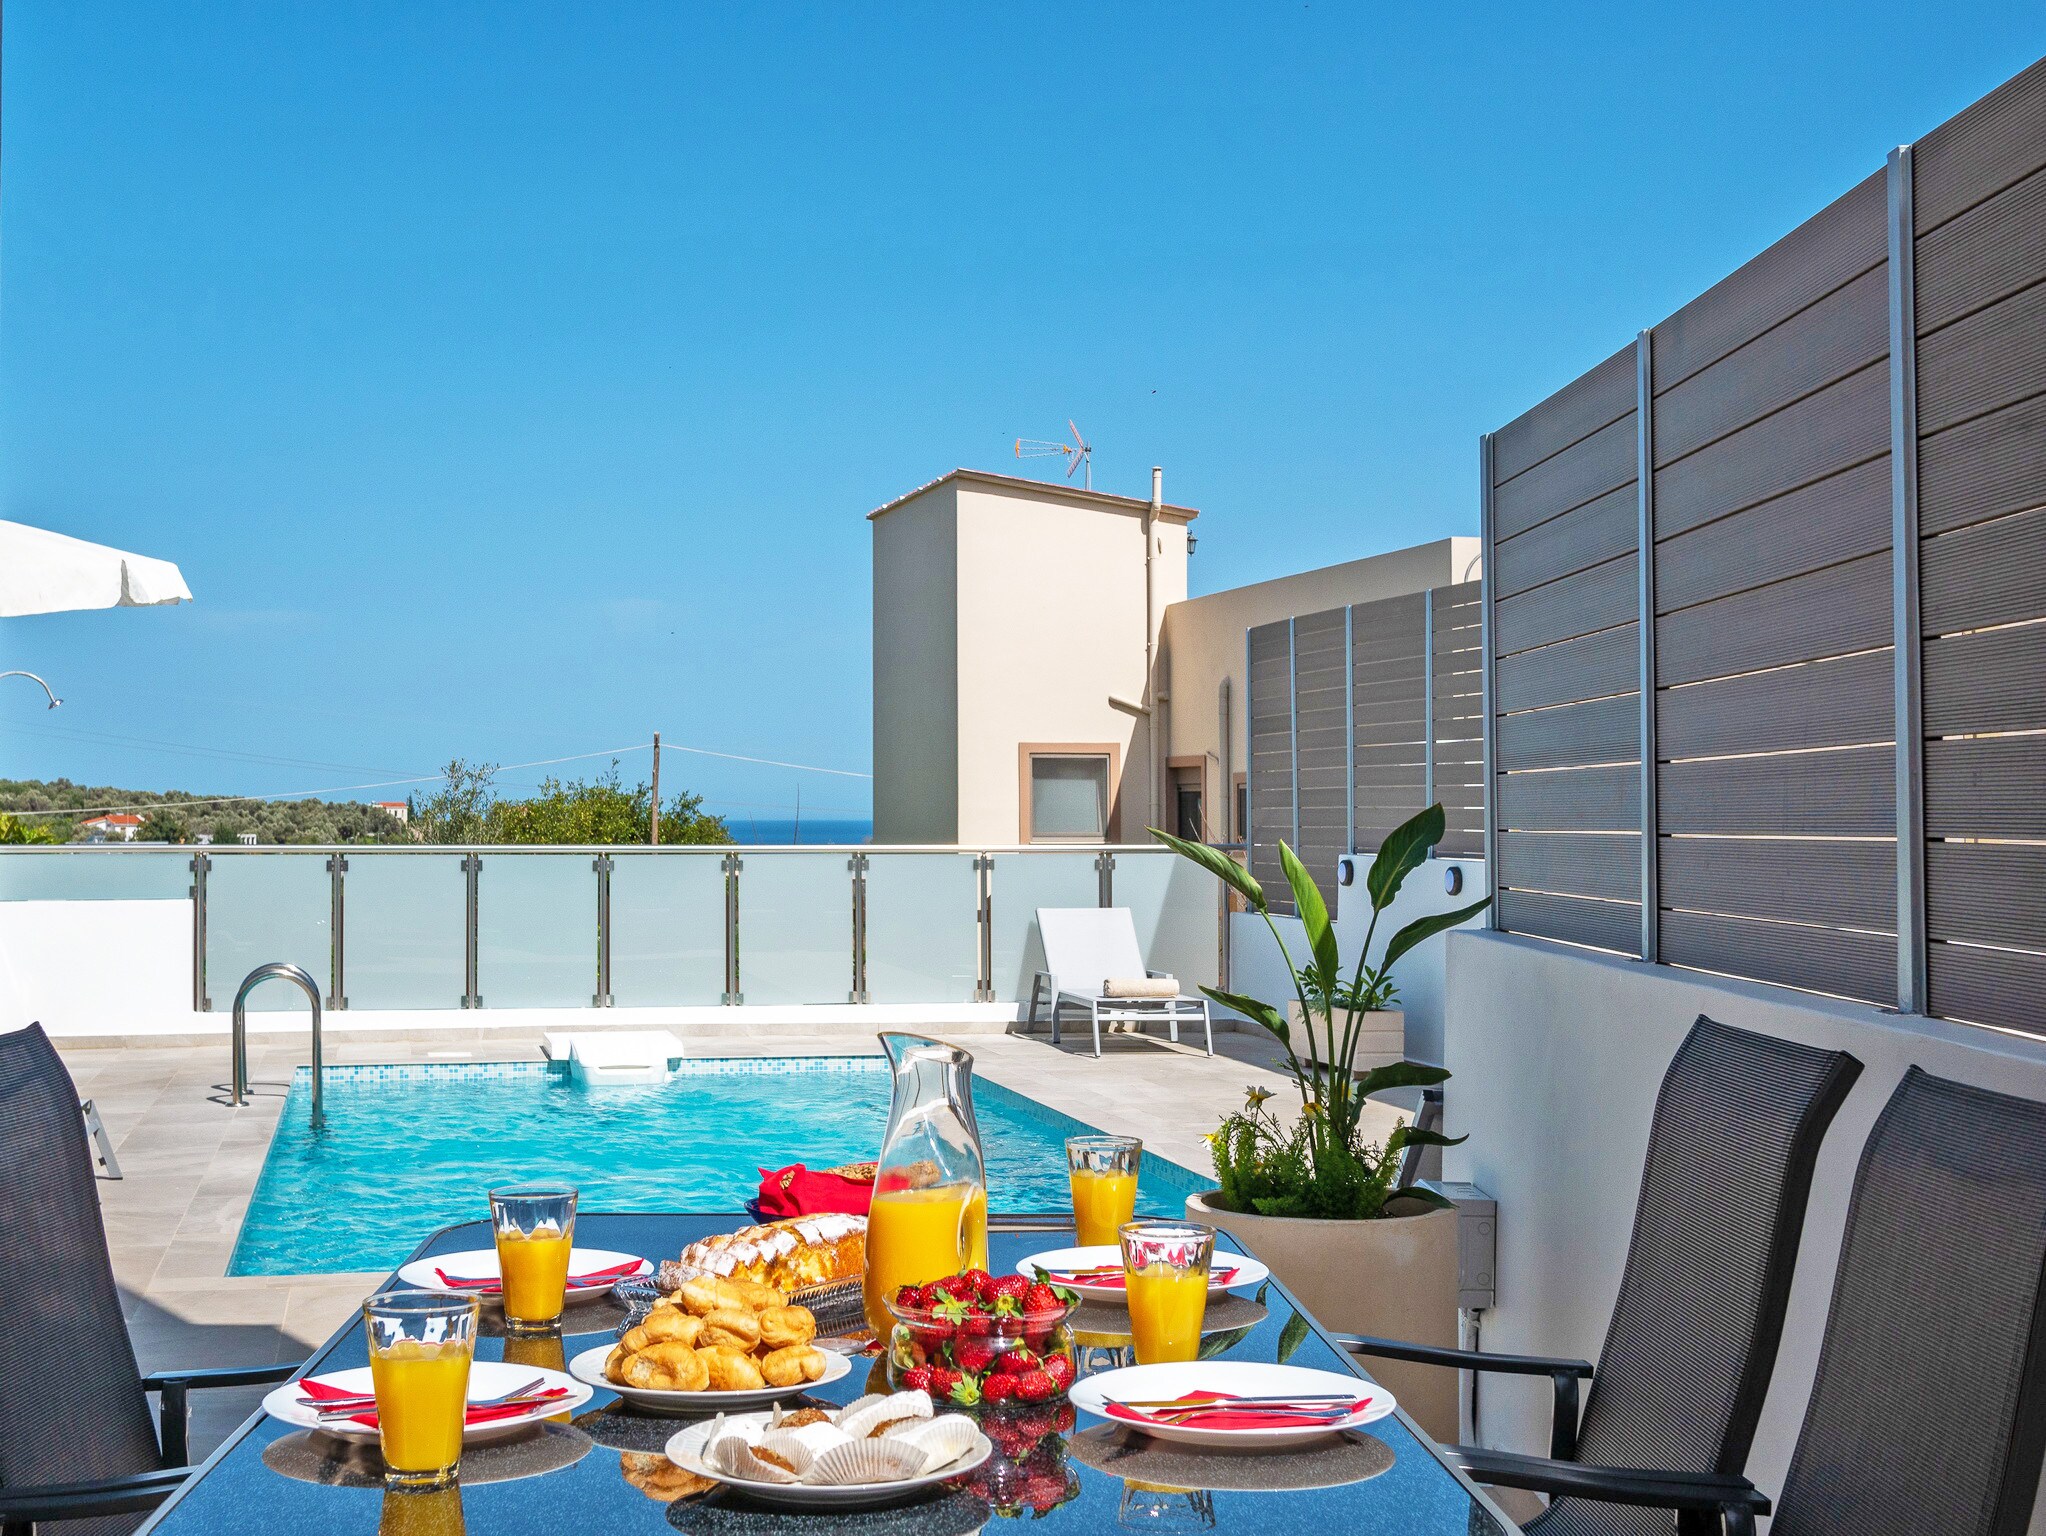 Swimming pool area of NewBuilt villa,Full facilities,Near all amenities,Adele,Rethymno,Crete